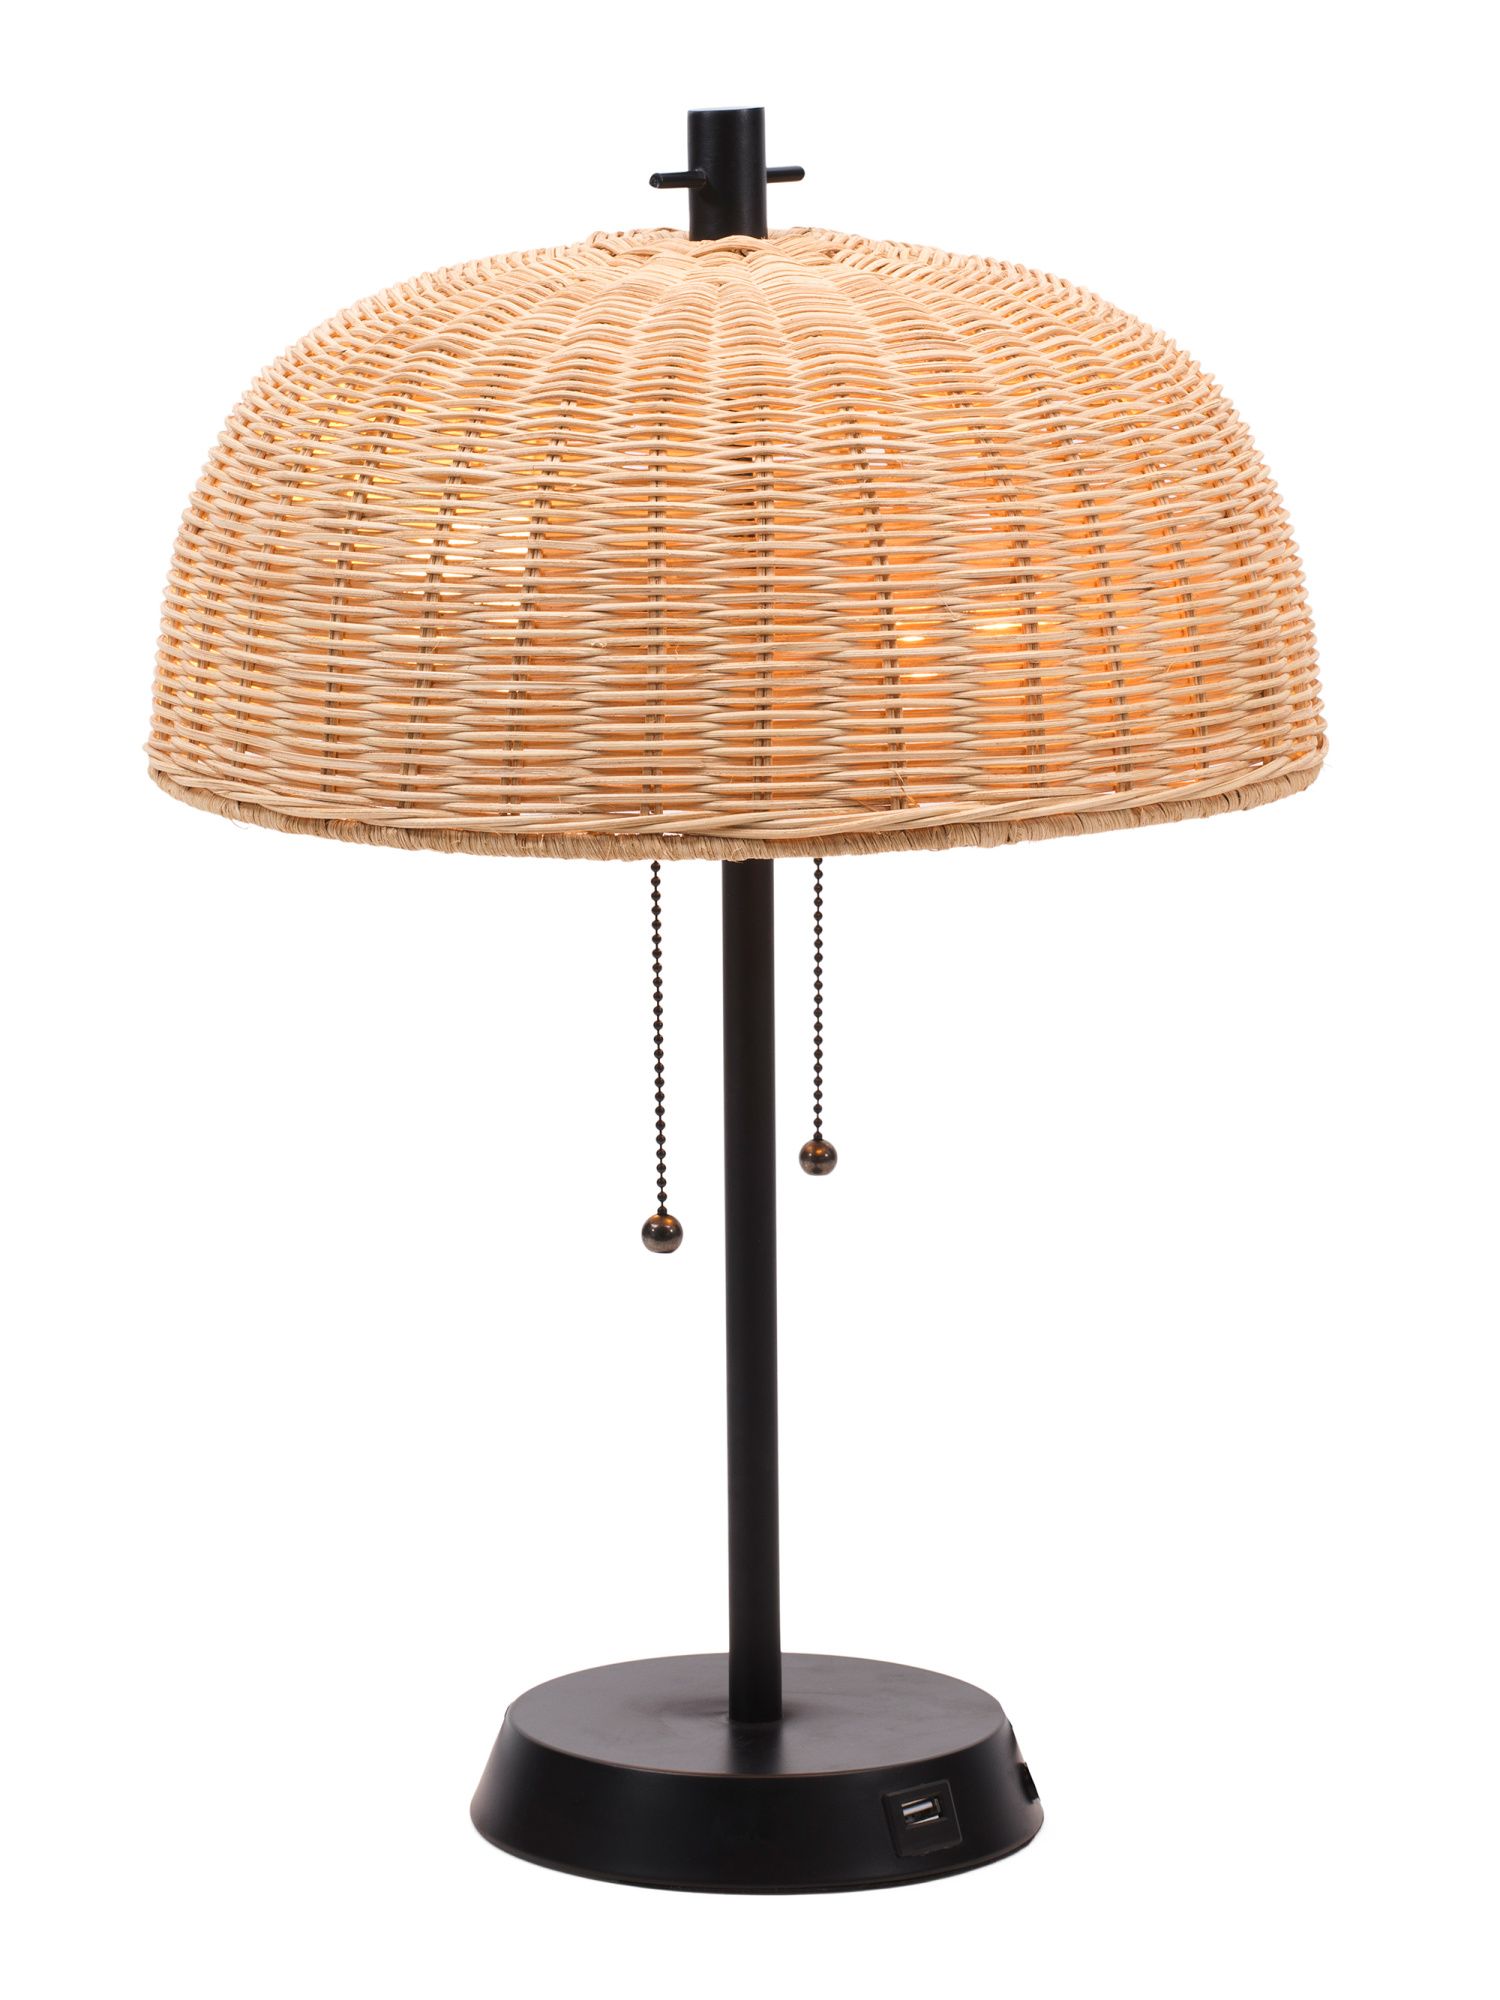 Rattan Dome Table Lamp | TJ Maxx